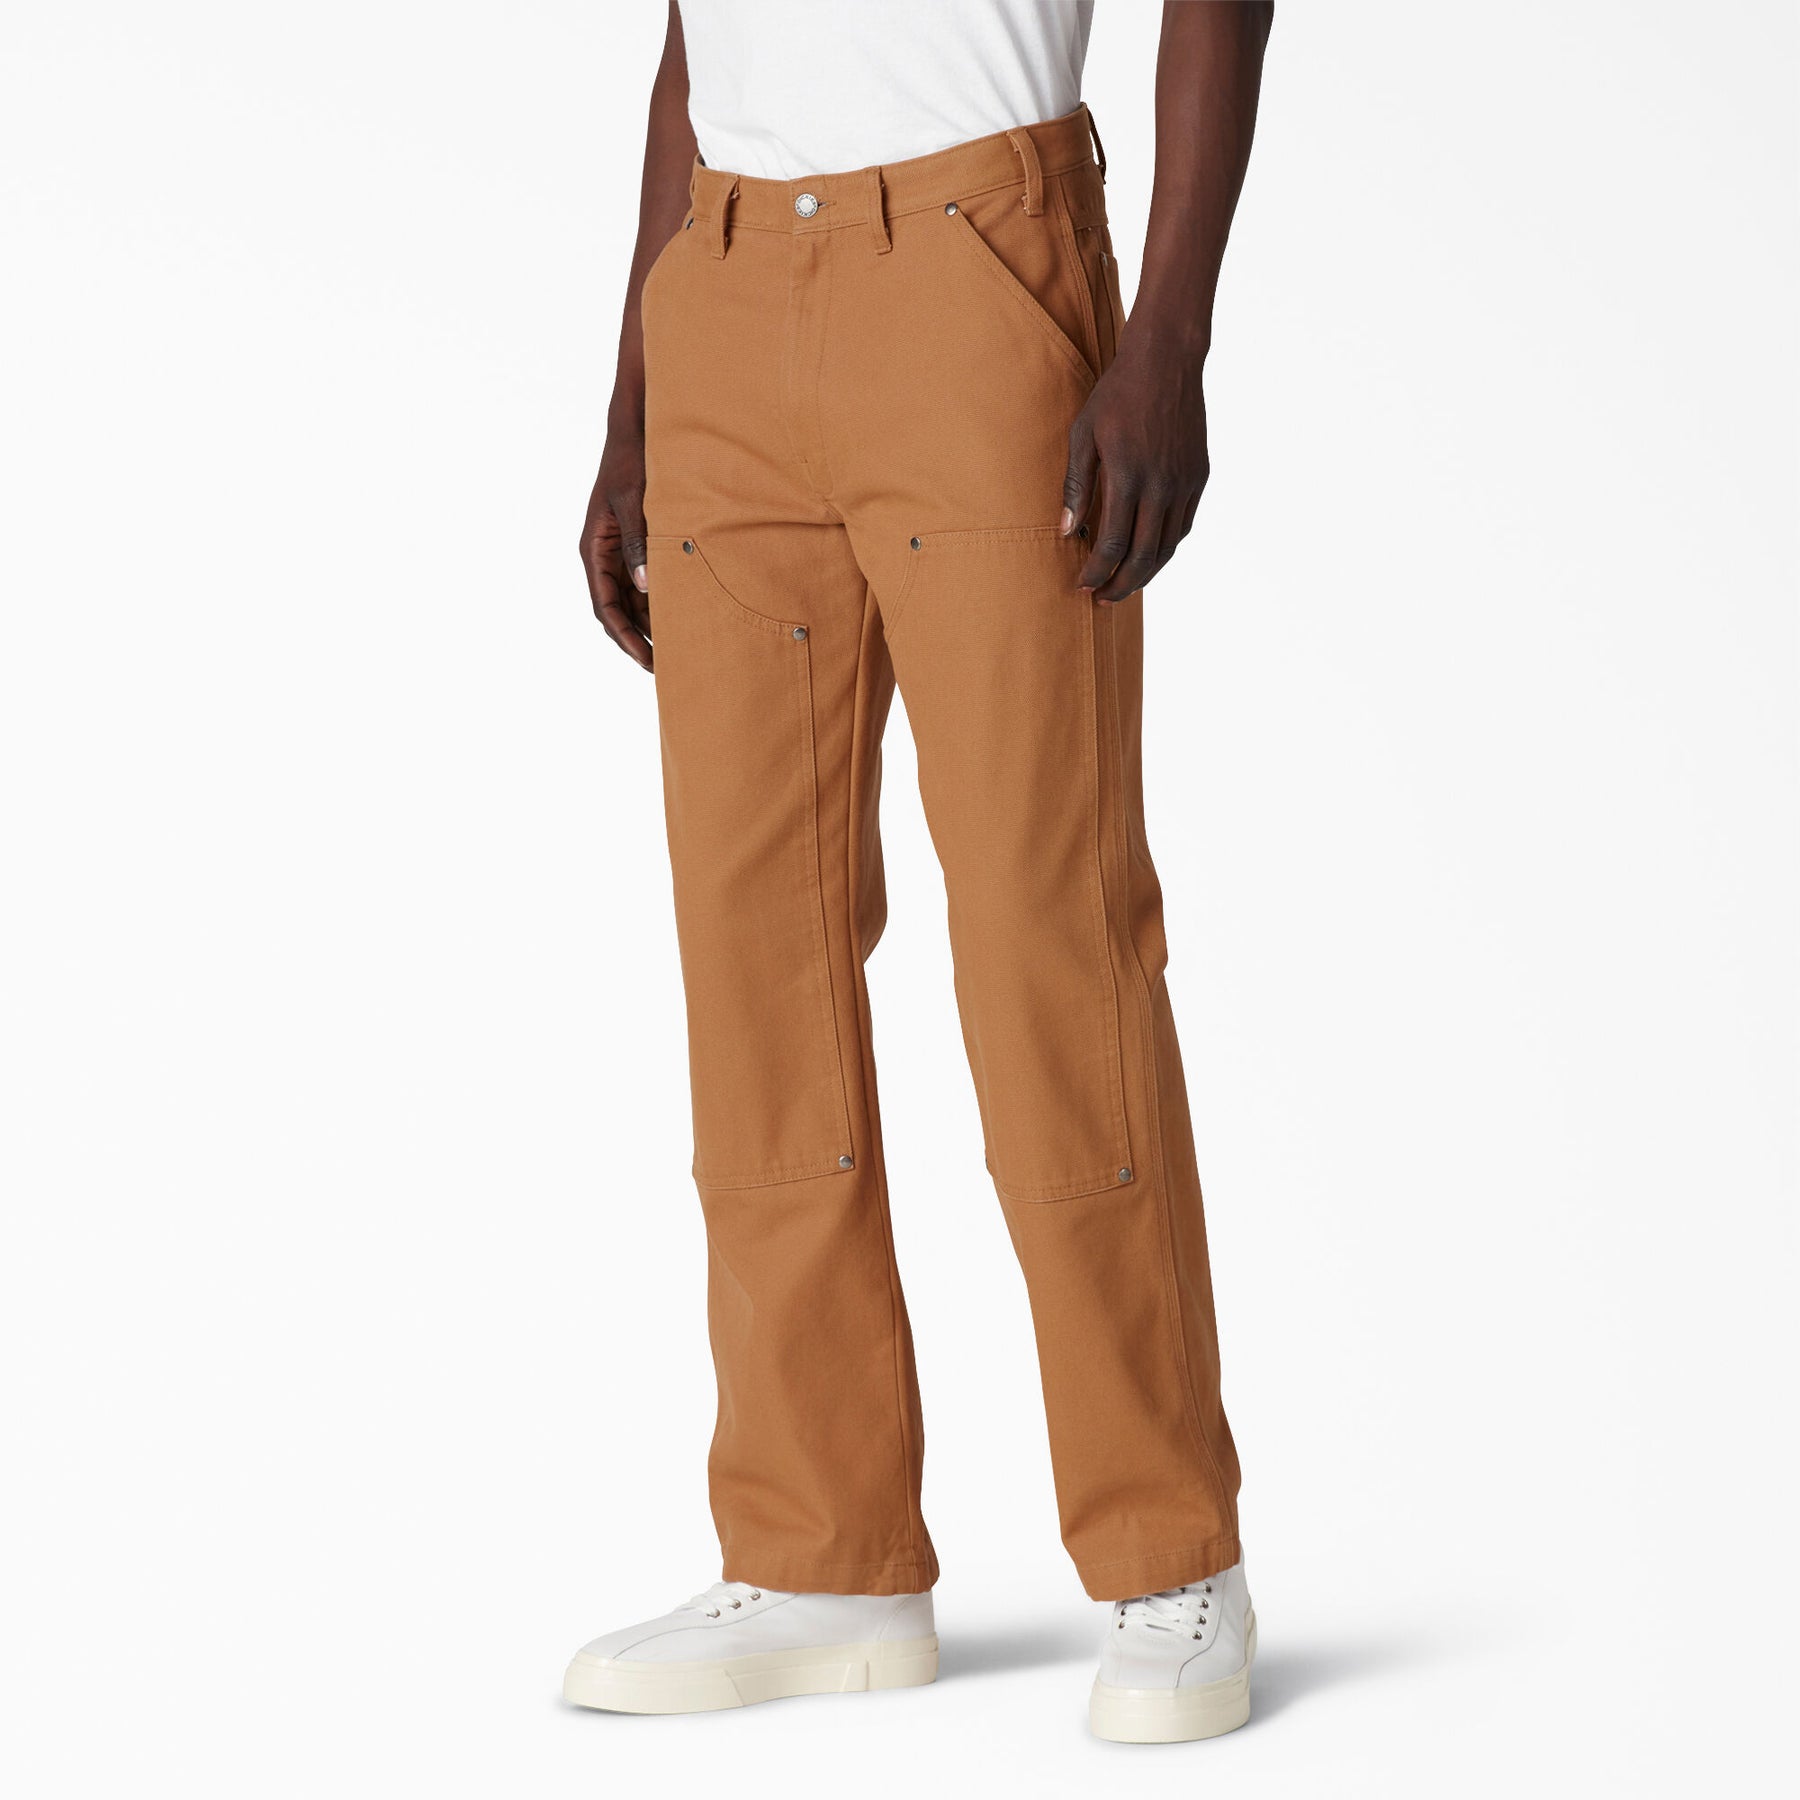 Dickies - Flat Front Corduroy Pants - Chocolate Brown – Change